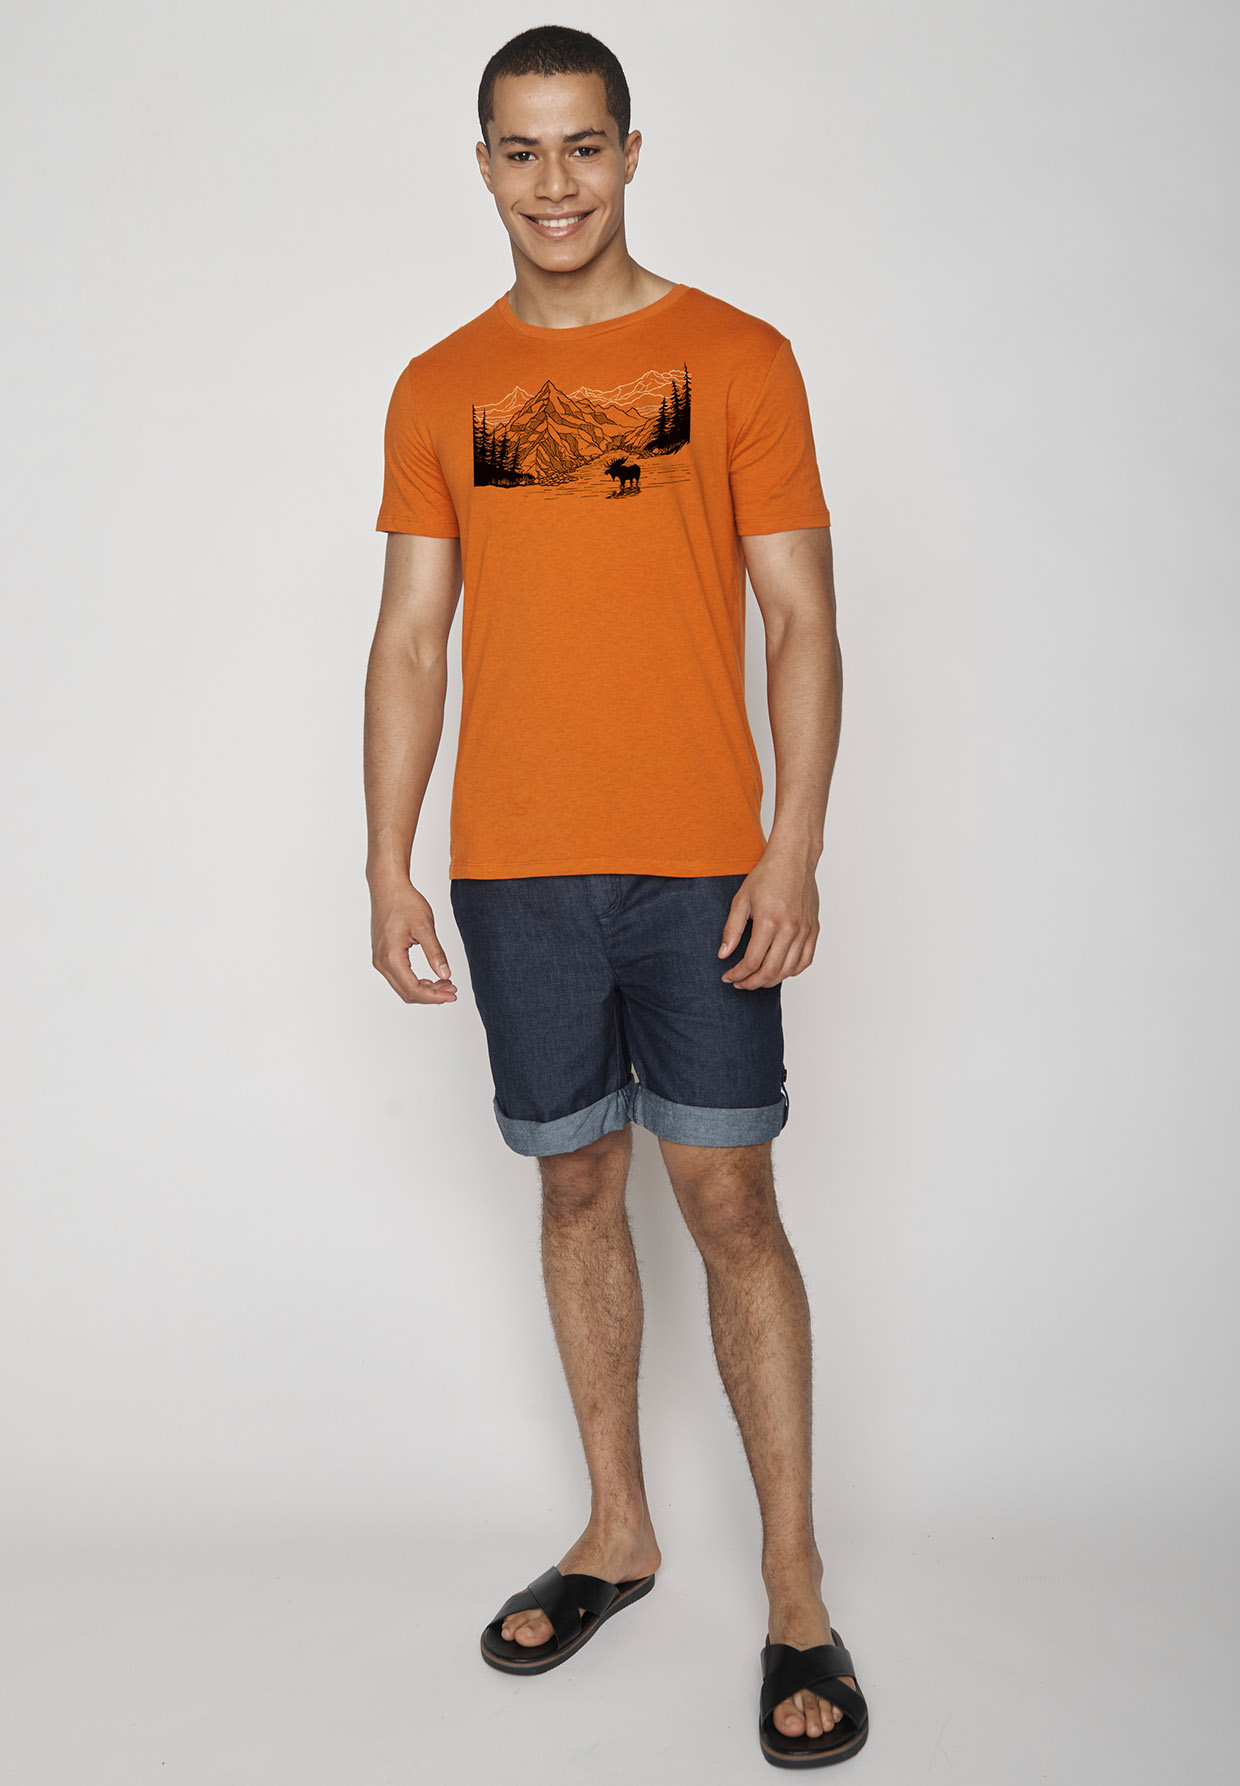 Print T-Shirt Nature Moose Mountain Guide Black Heather Orange